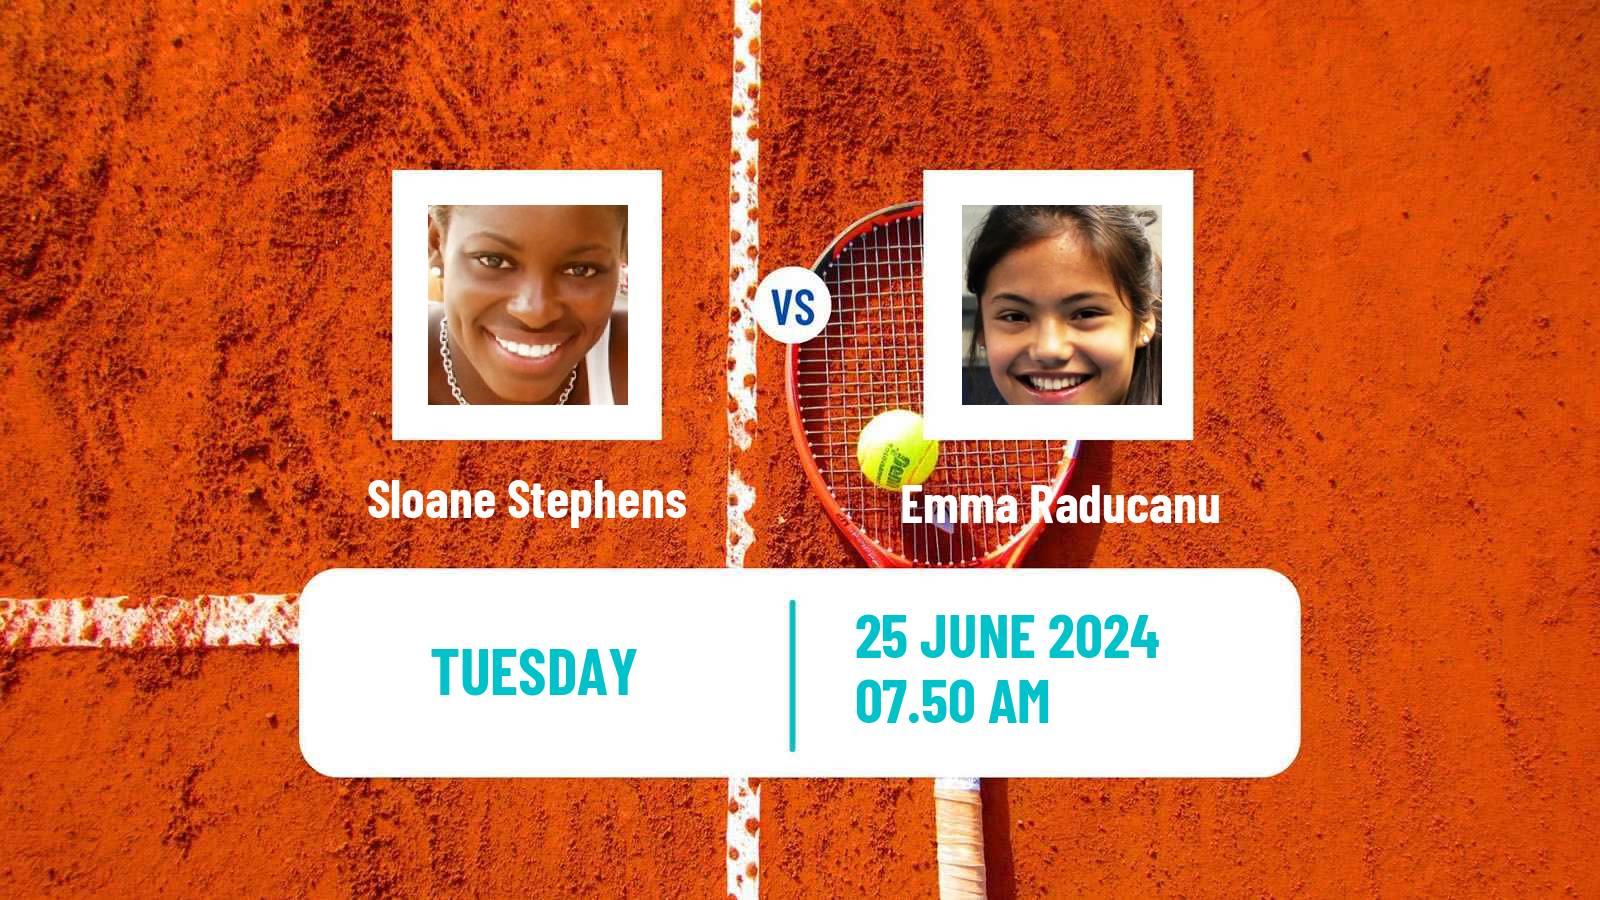 Tennis WTA Eastbourne Sloane Stephens - Emma Raducanu